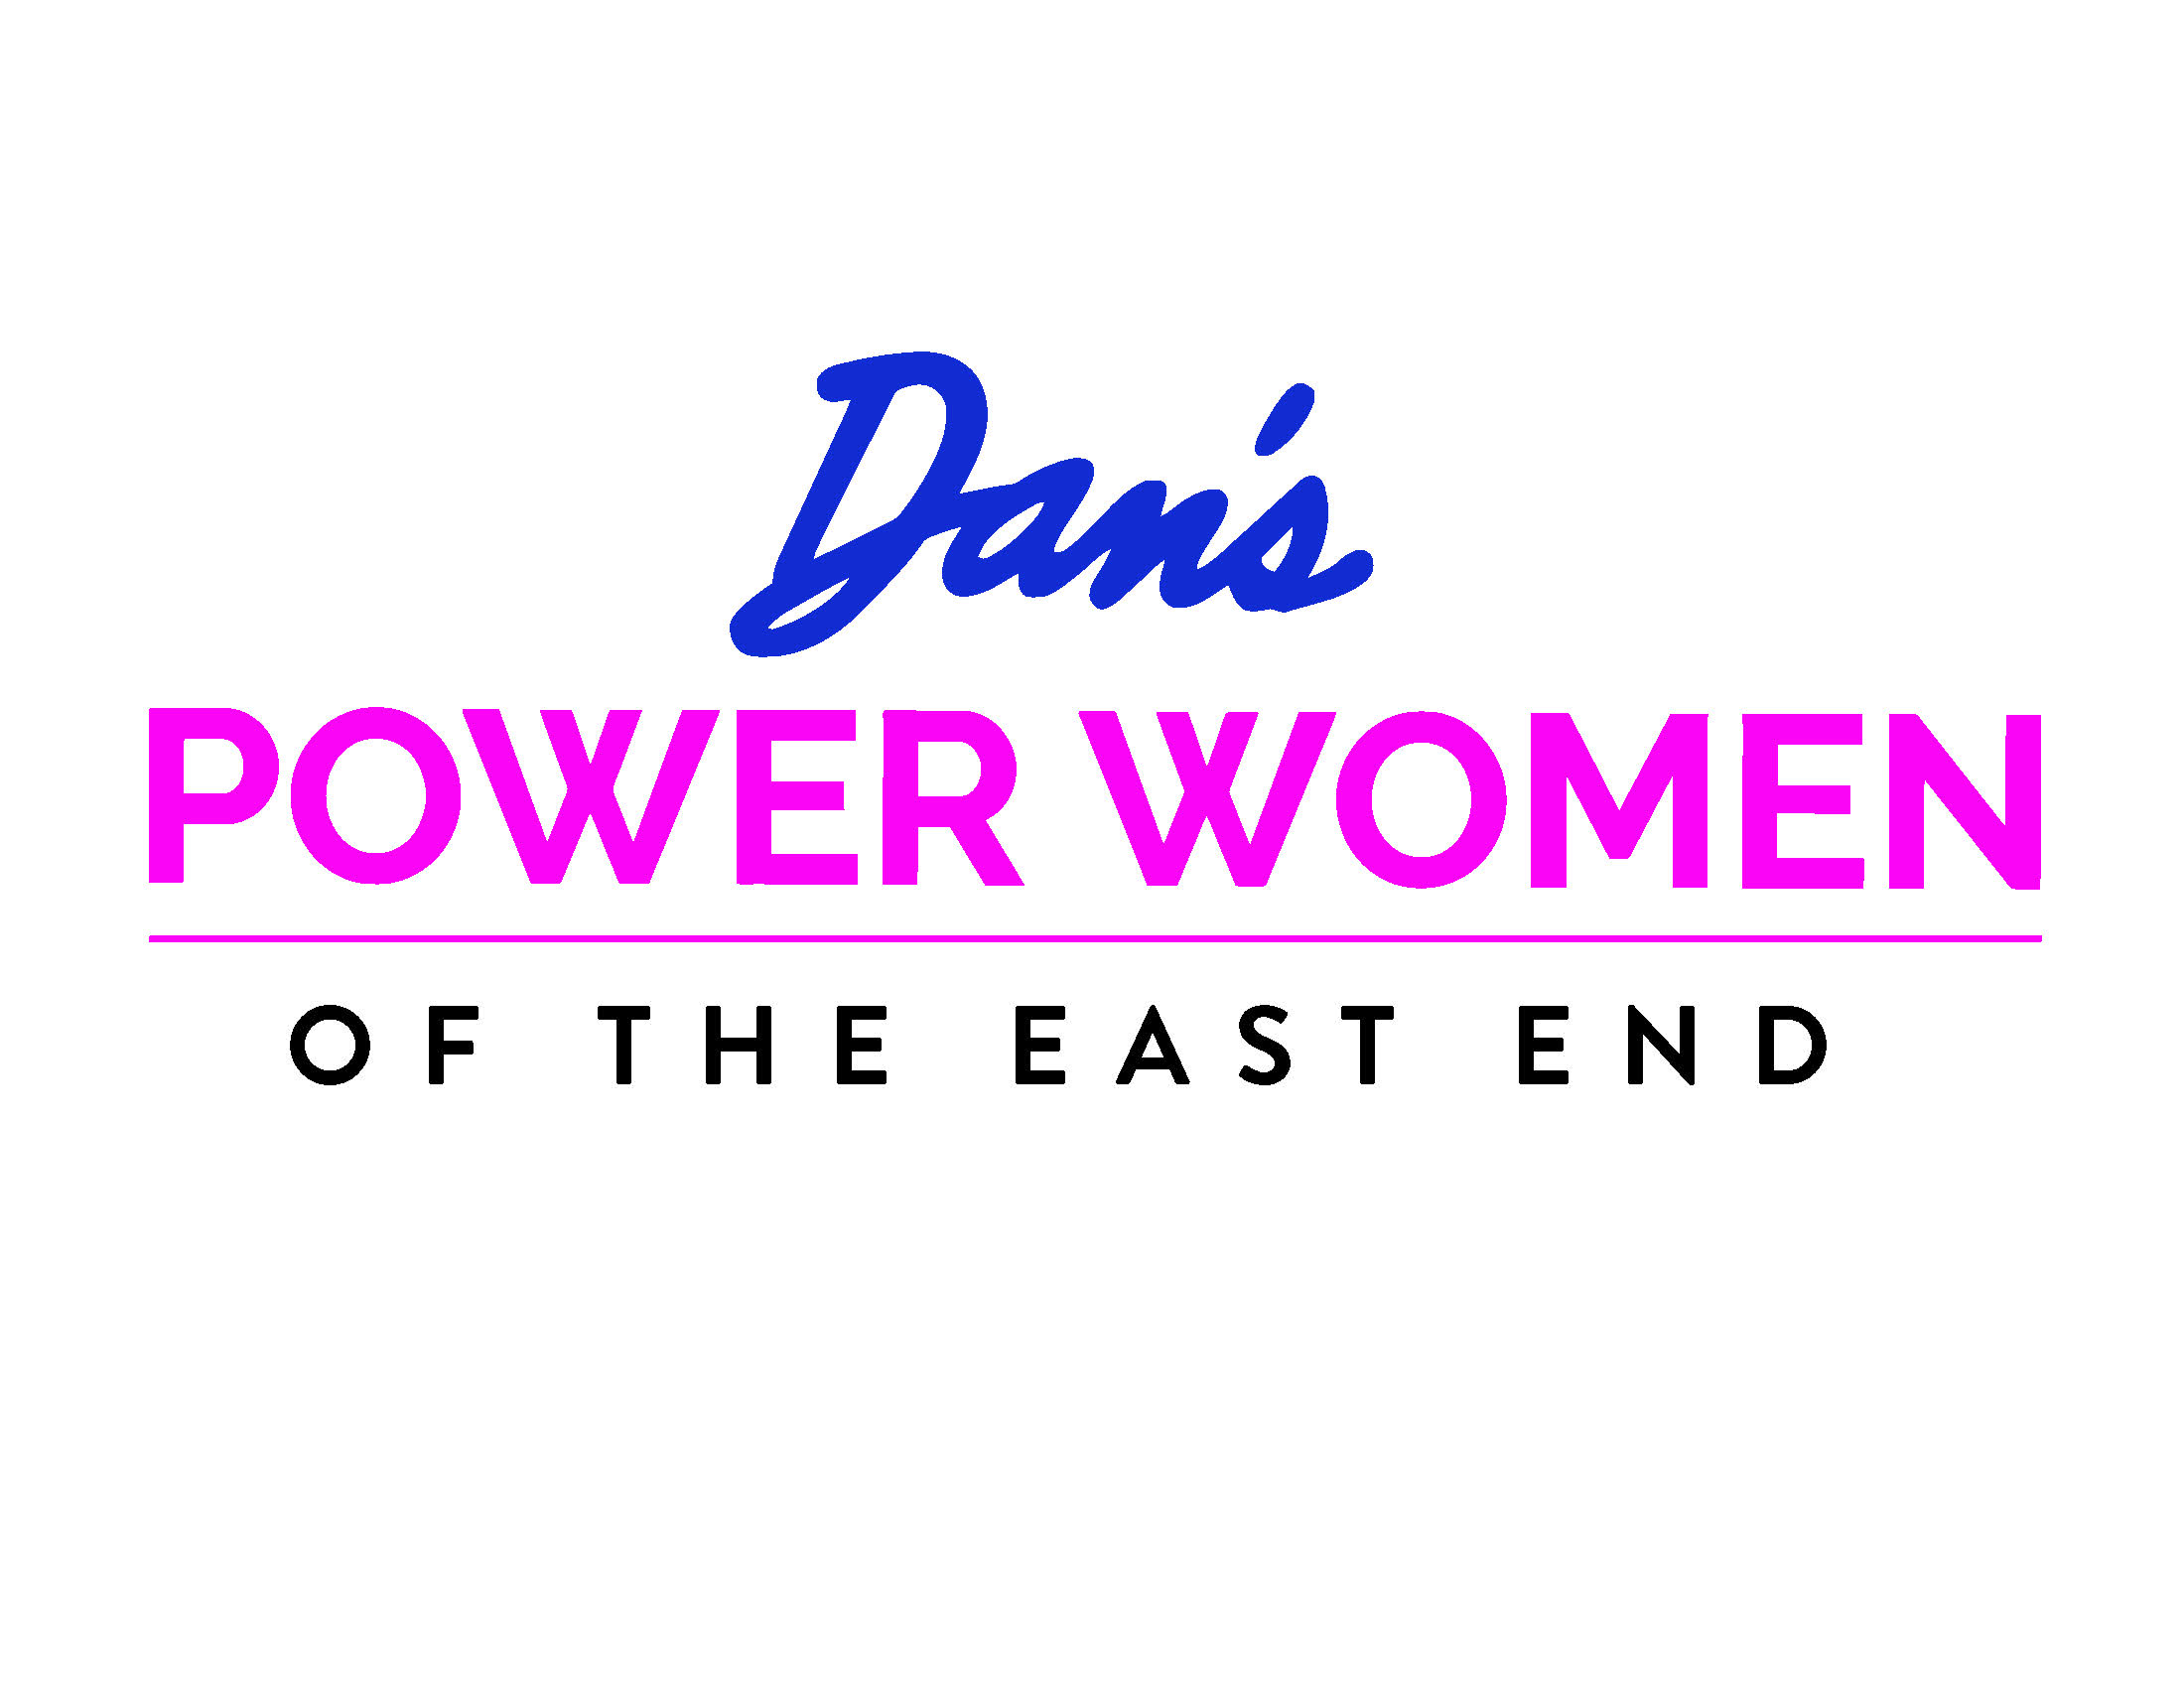 Dan's Power Women of the East End logo